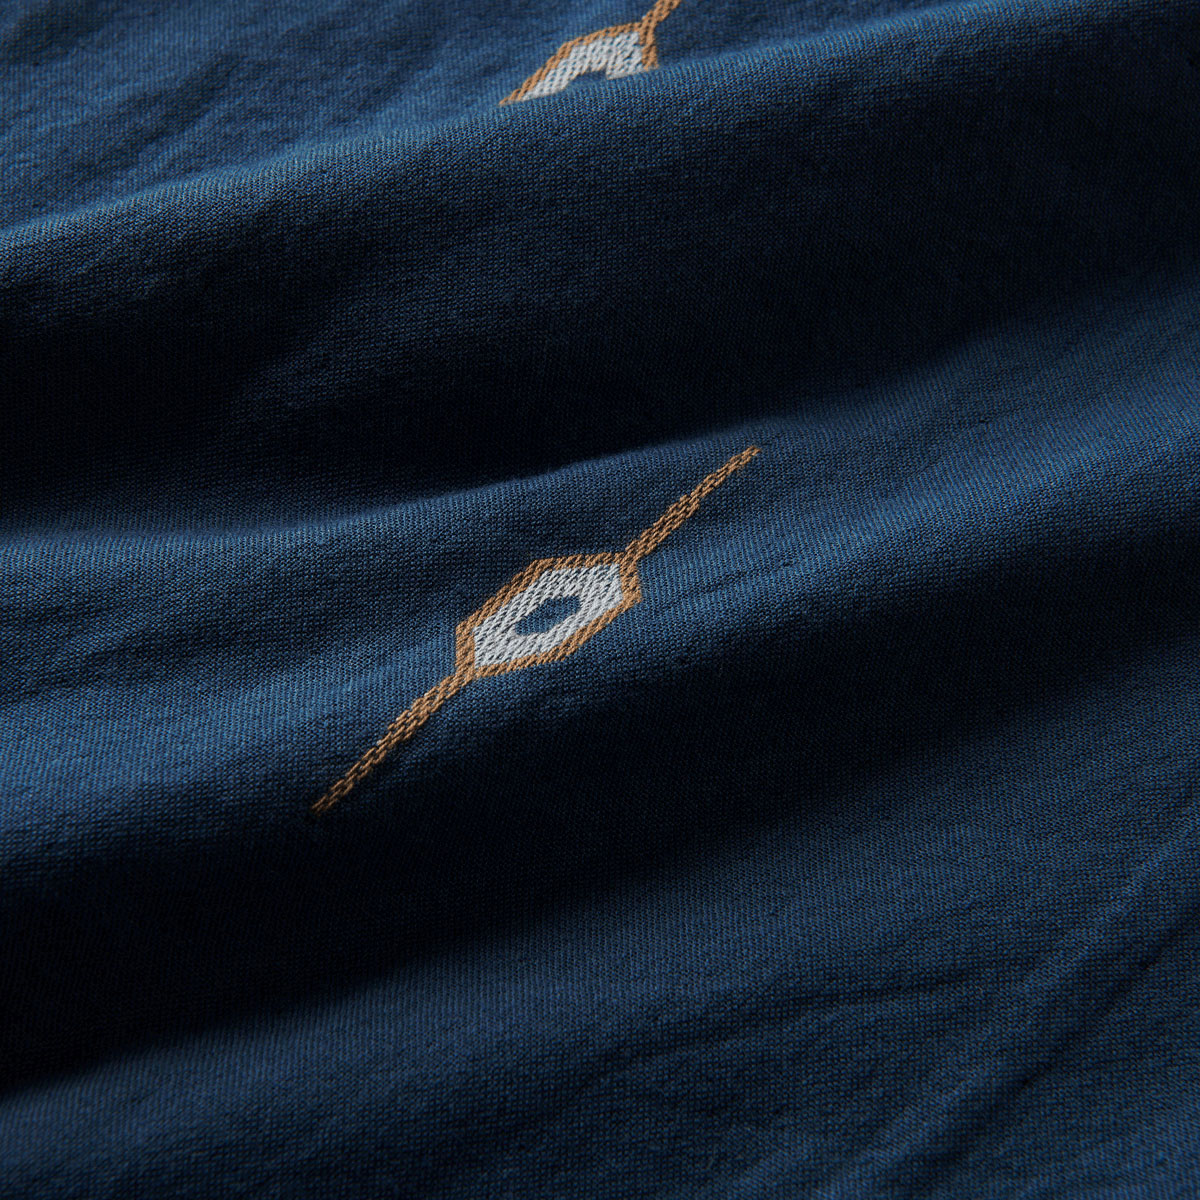 Roark Journey Woven Shirt - Castagno Nannai Blue image 5